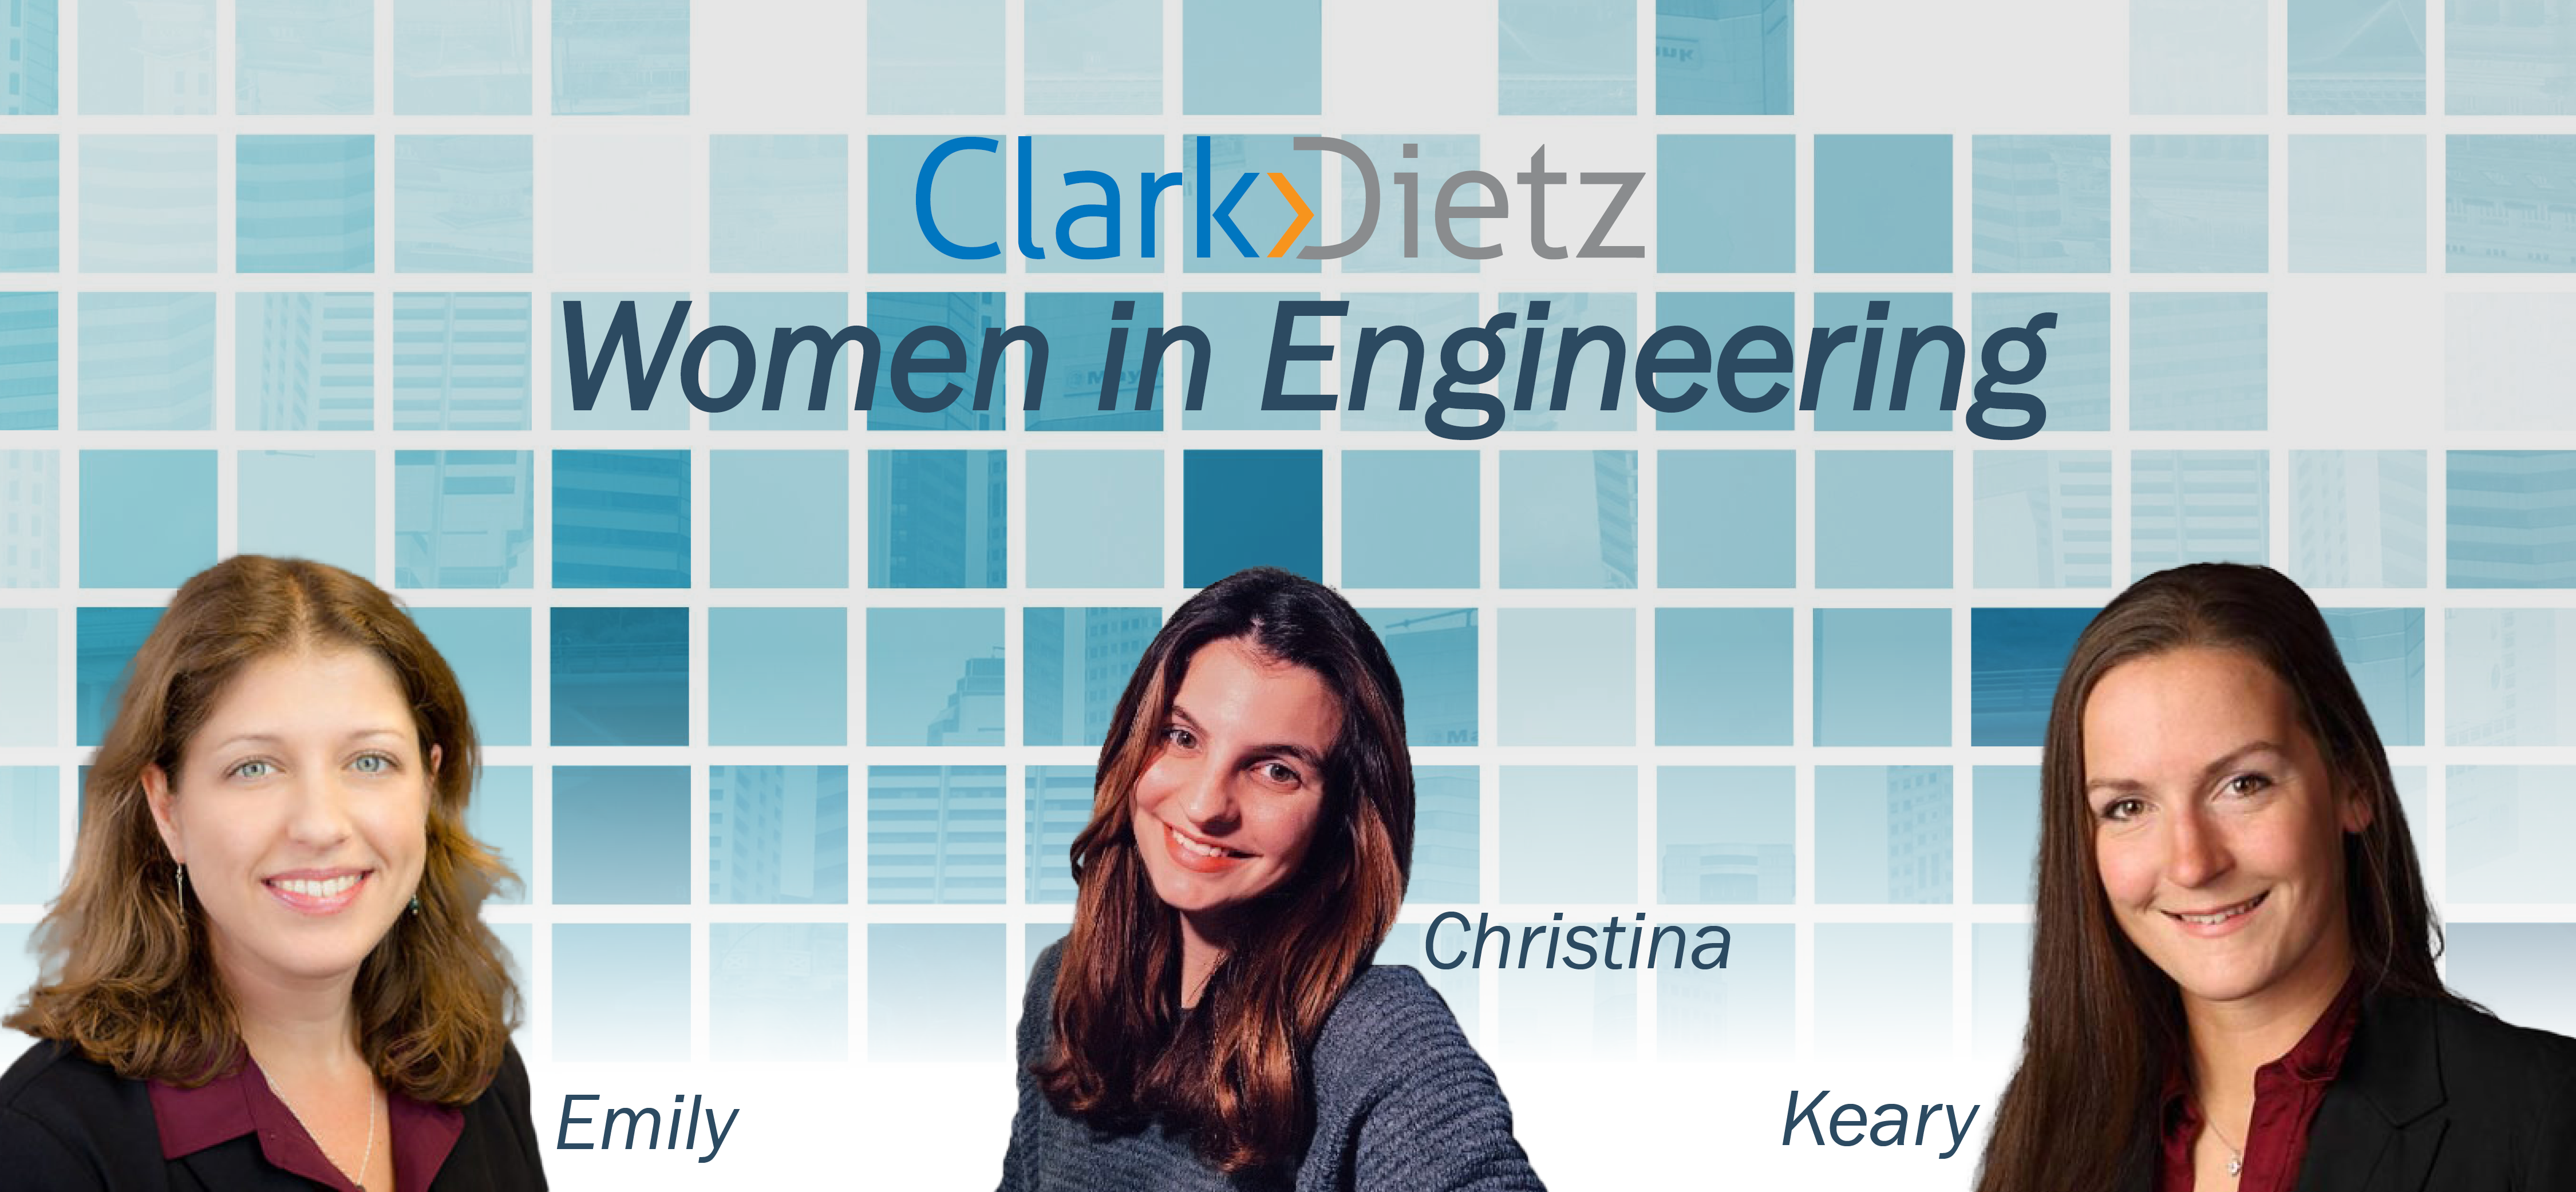 Women in Engineering: Their Experience